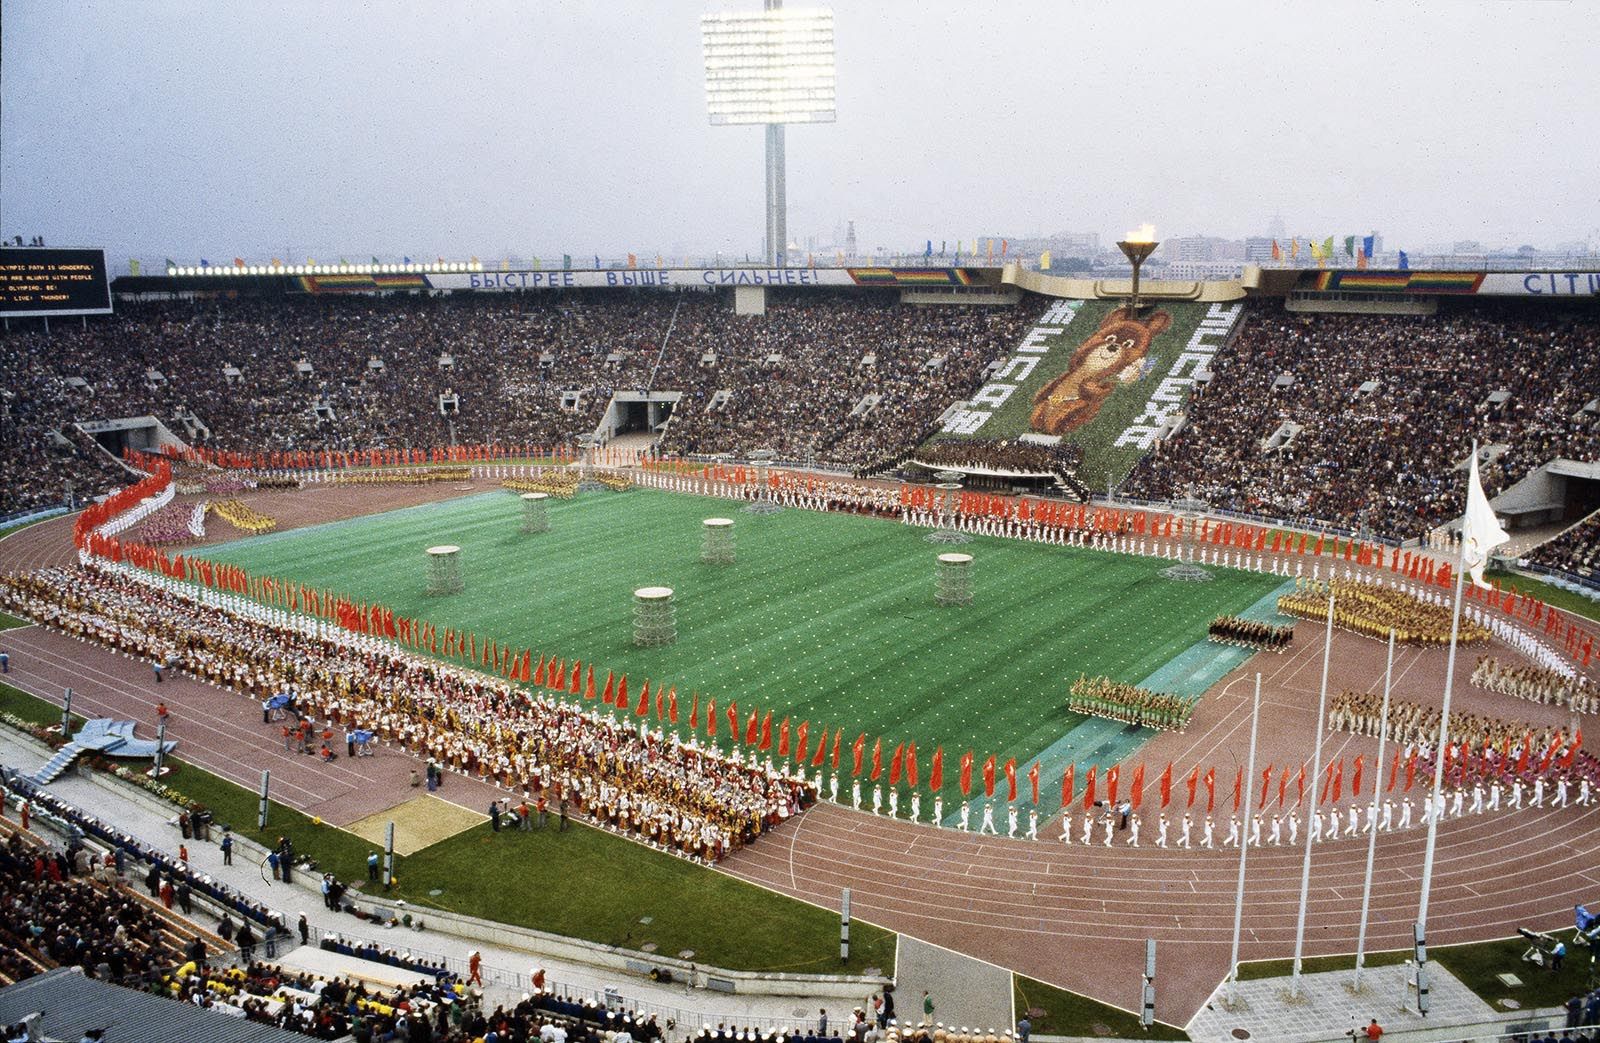 Столица олимпиады 1996 года. Лужники Москва 1980.